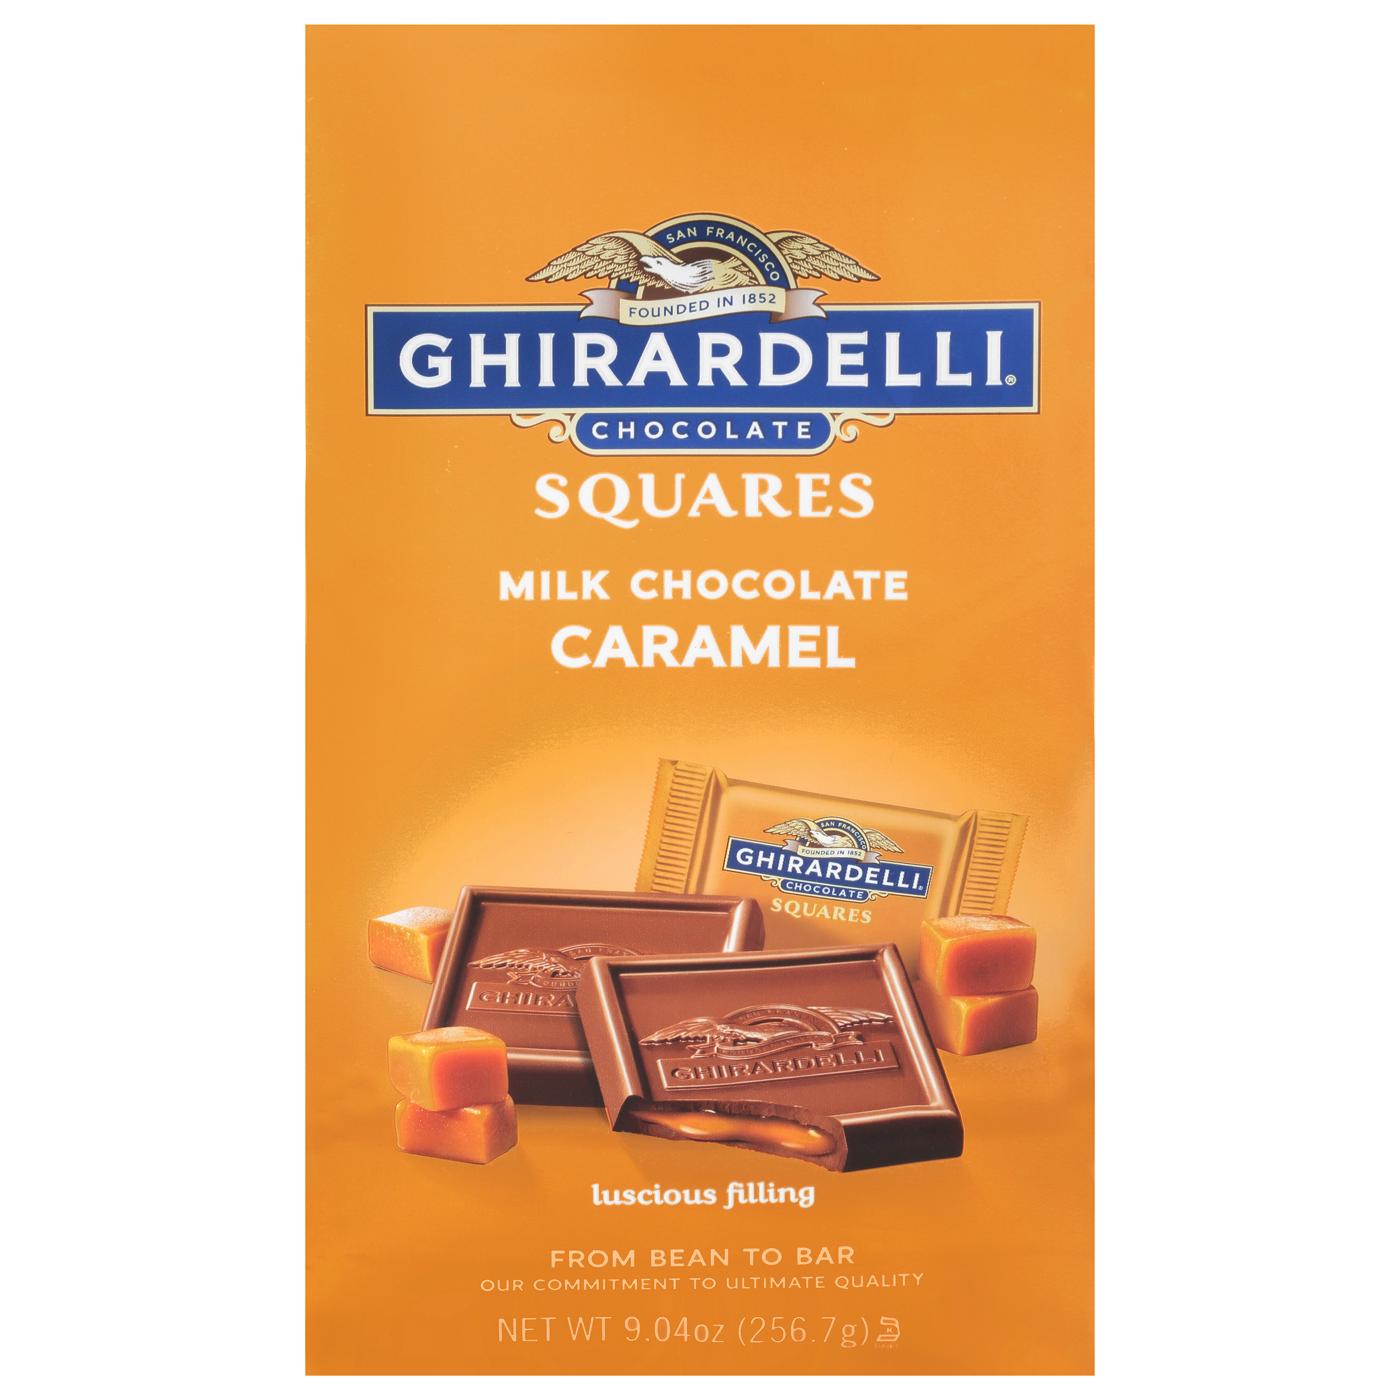 Ghirardelli Milk Chocolate Caramel Squares; image 1 of 3